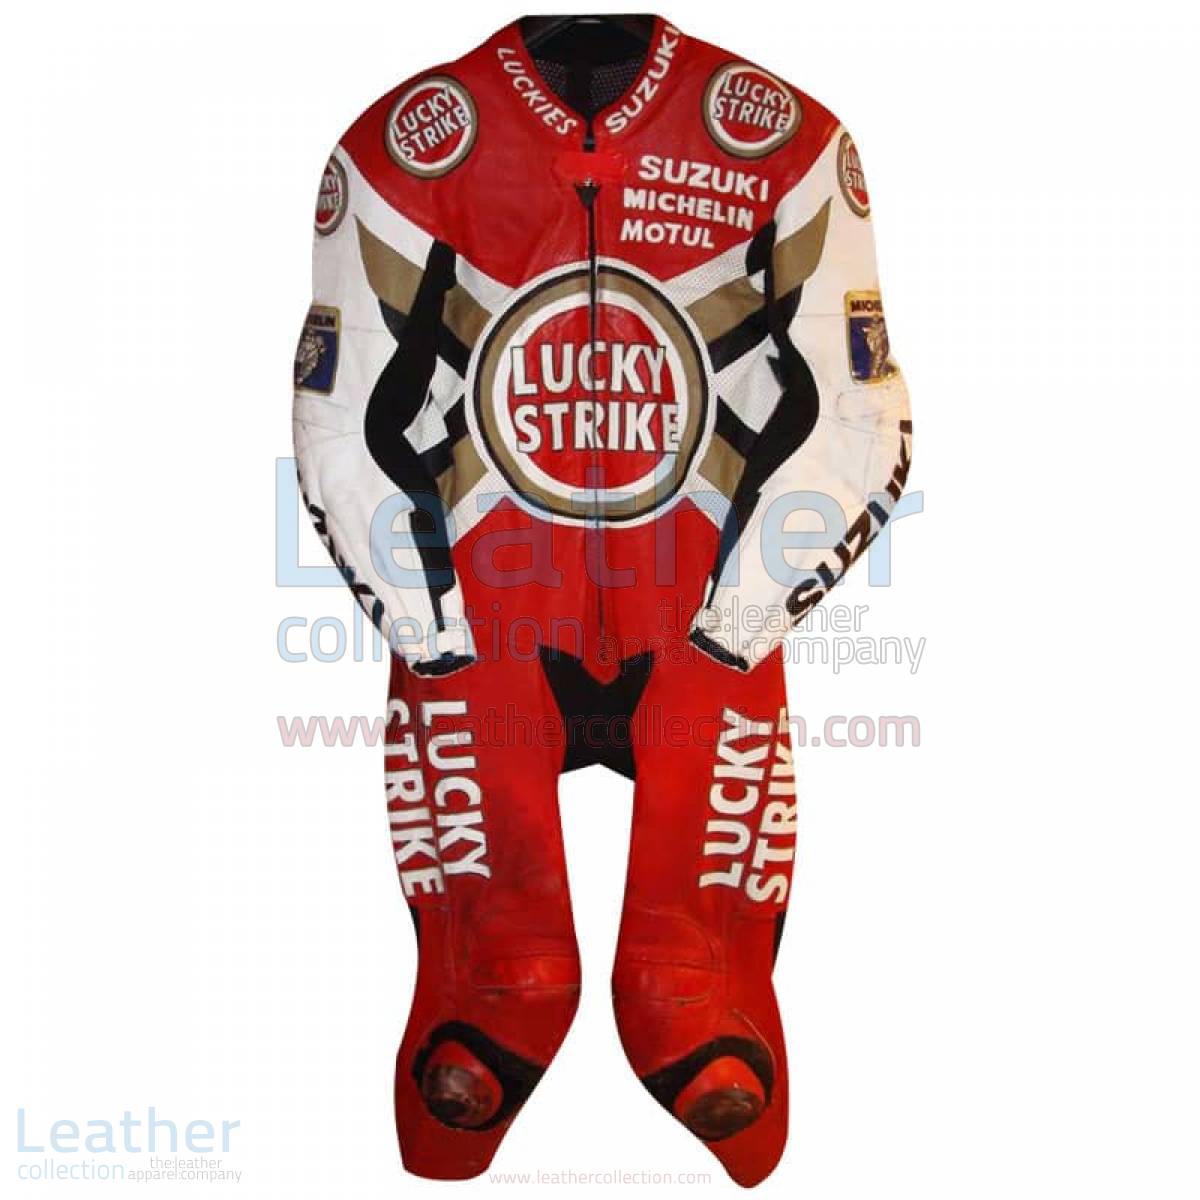 Anthony Gobert Suzuki Lucky Strike 1997 MotoGP Leathers